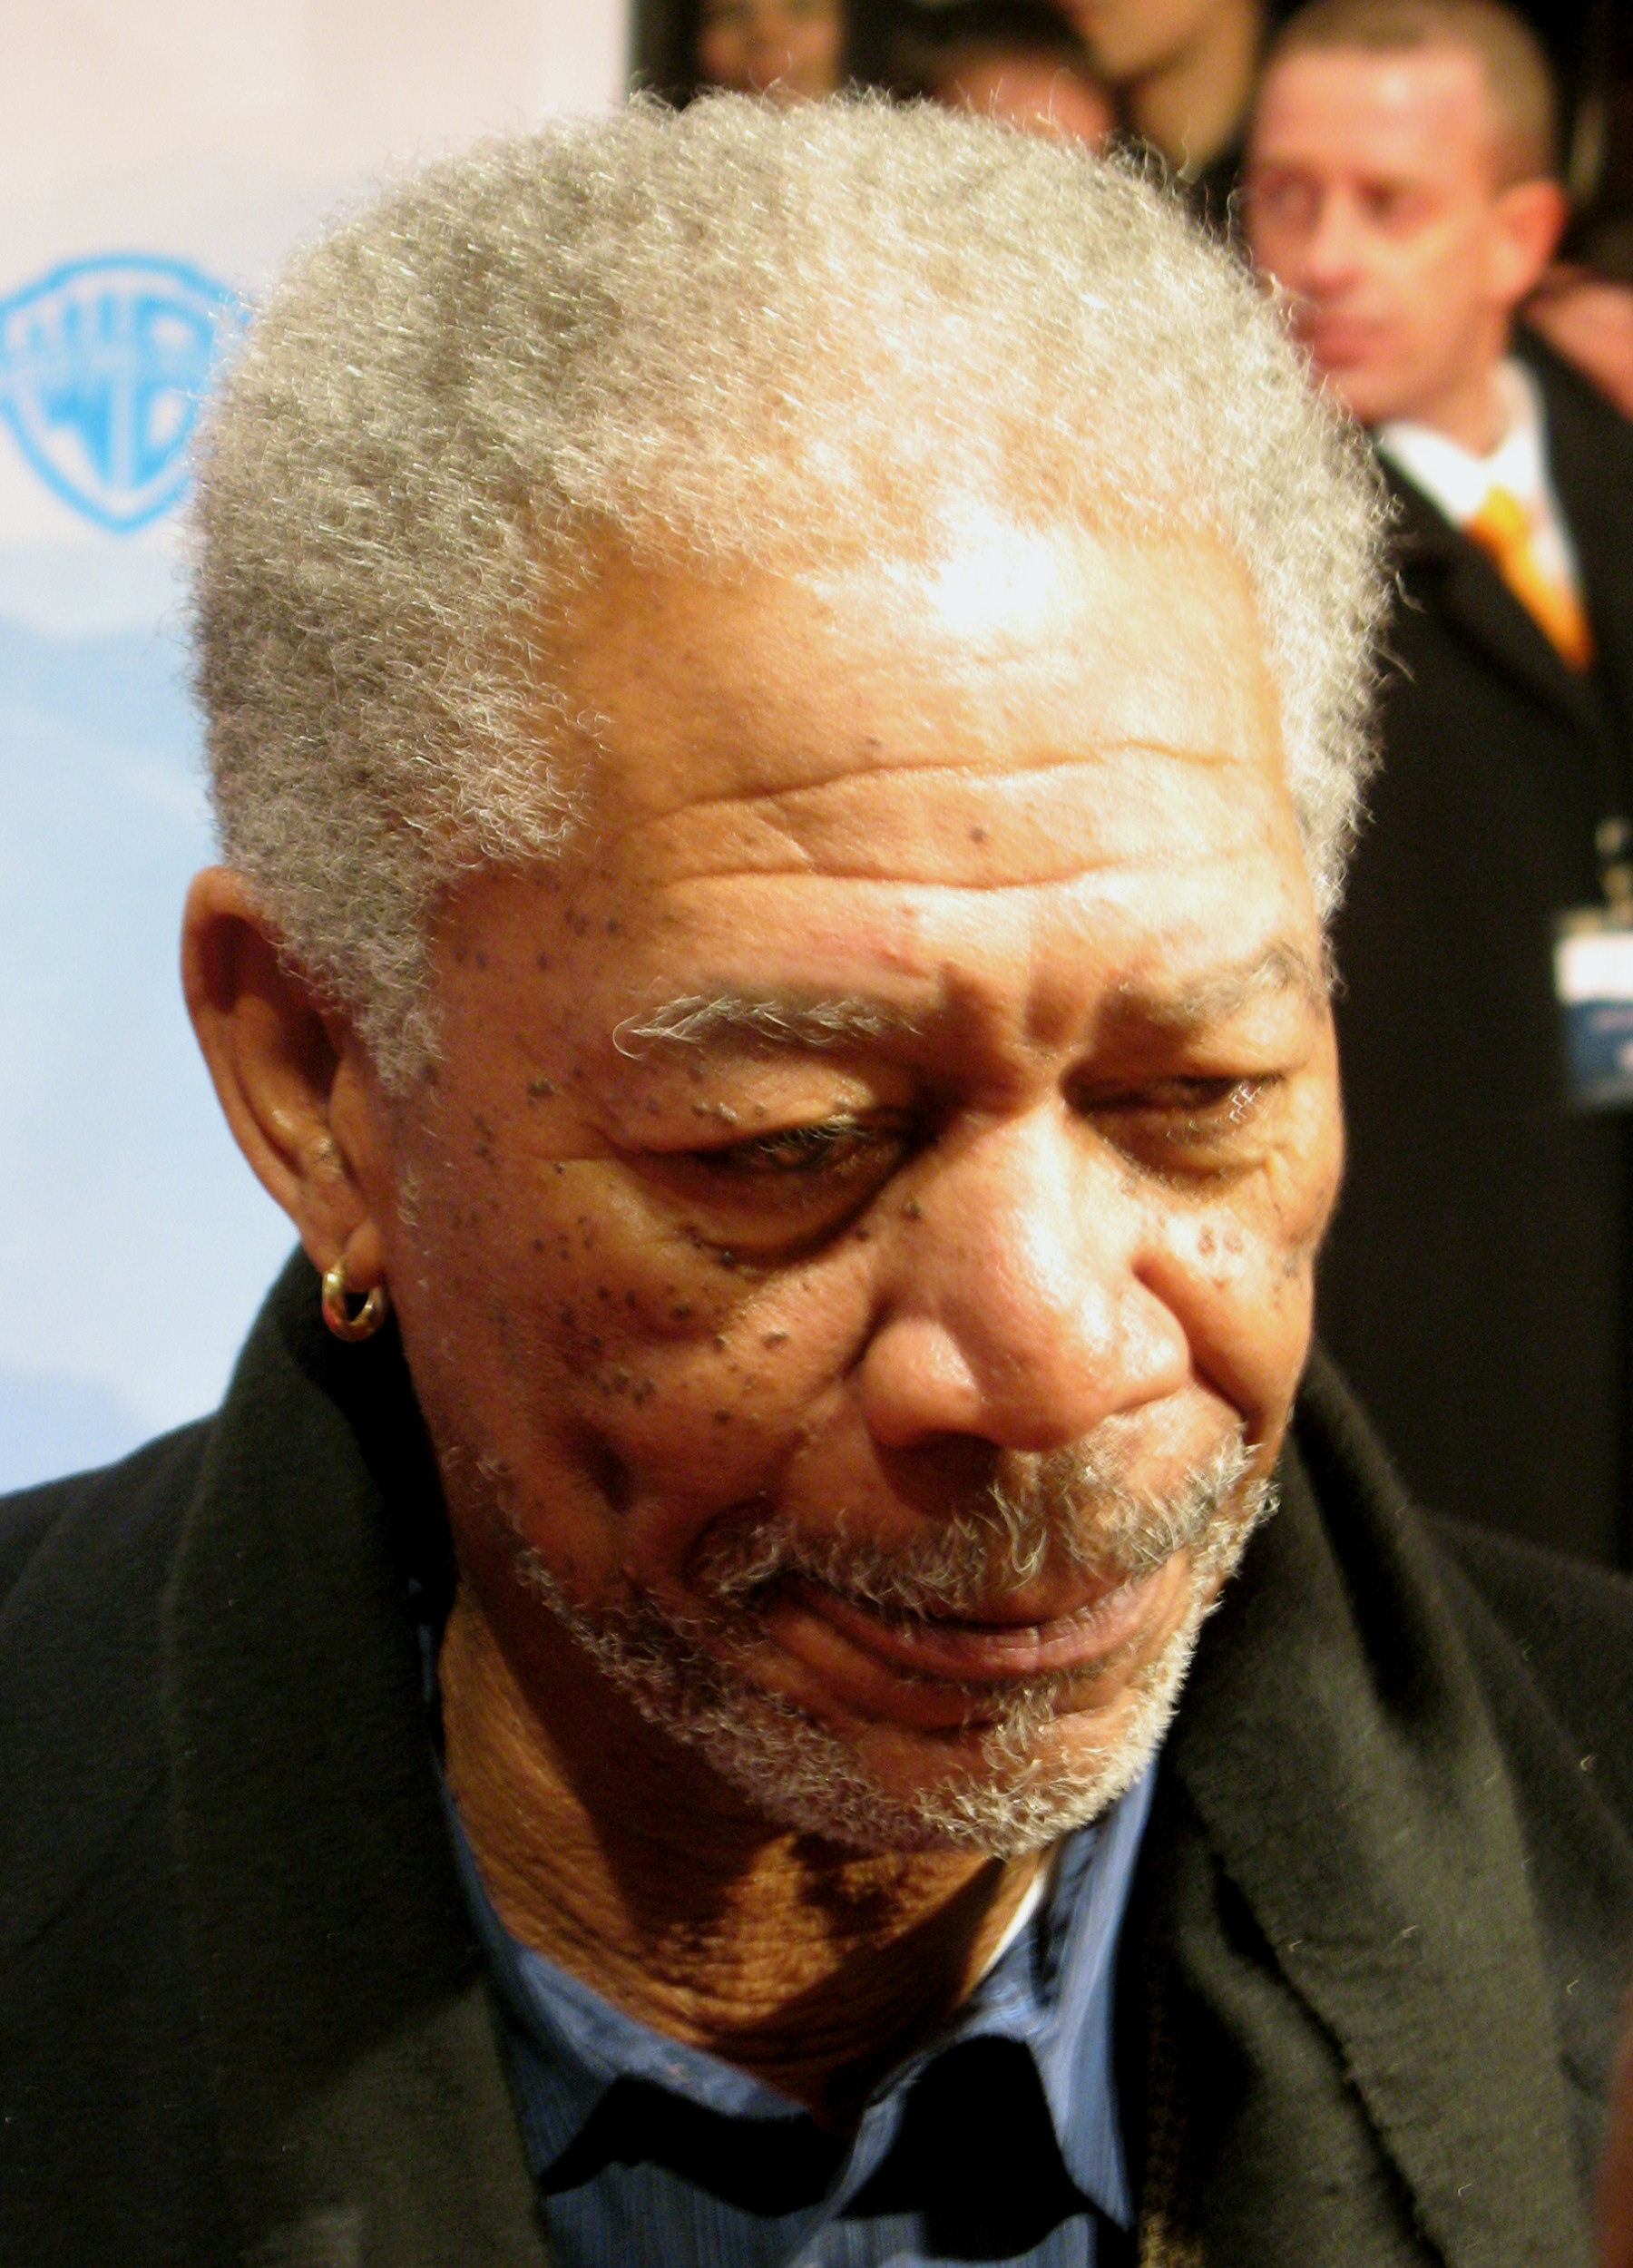 Morgan Freeman photo #110259, Morgan Freeman image